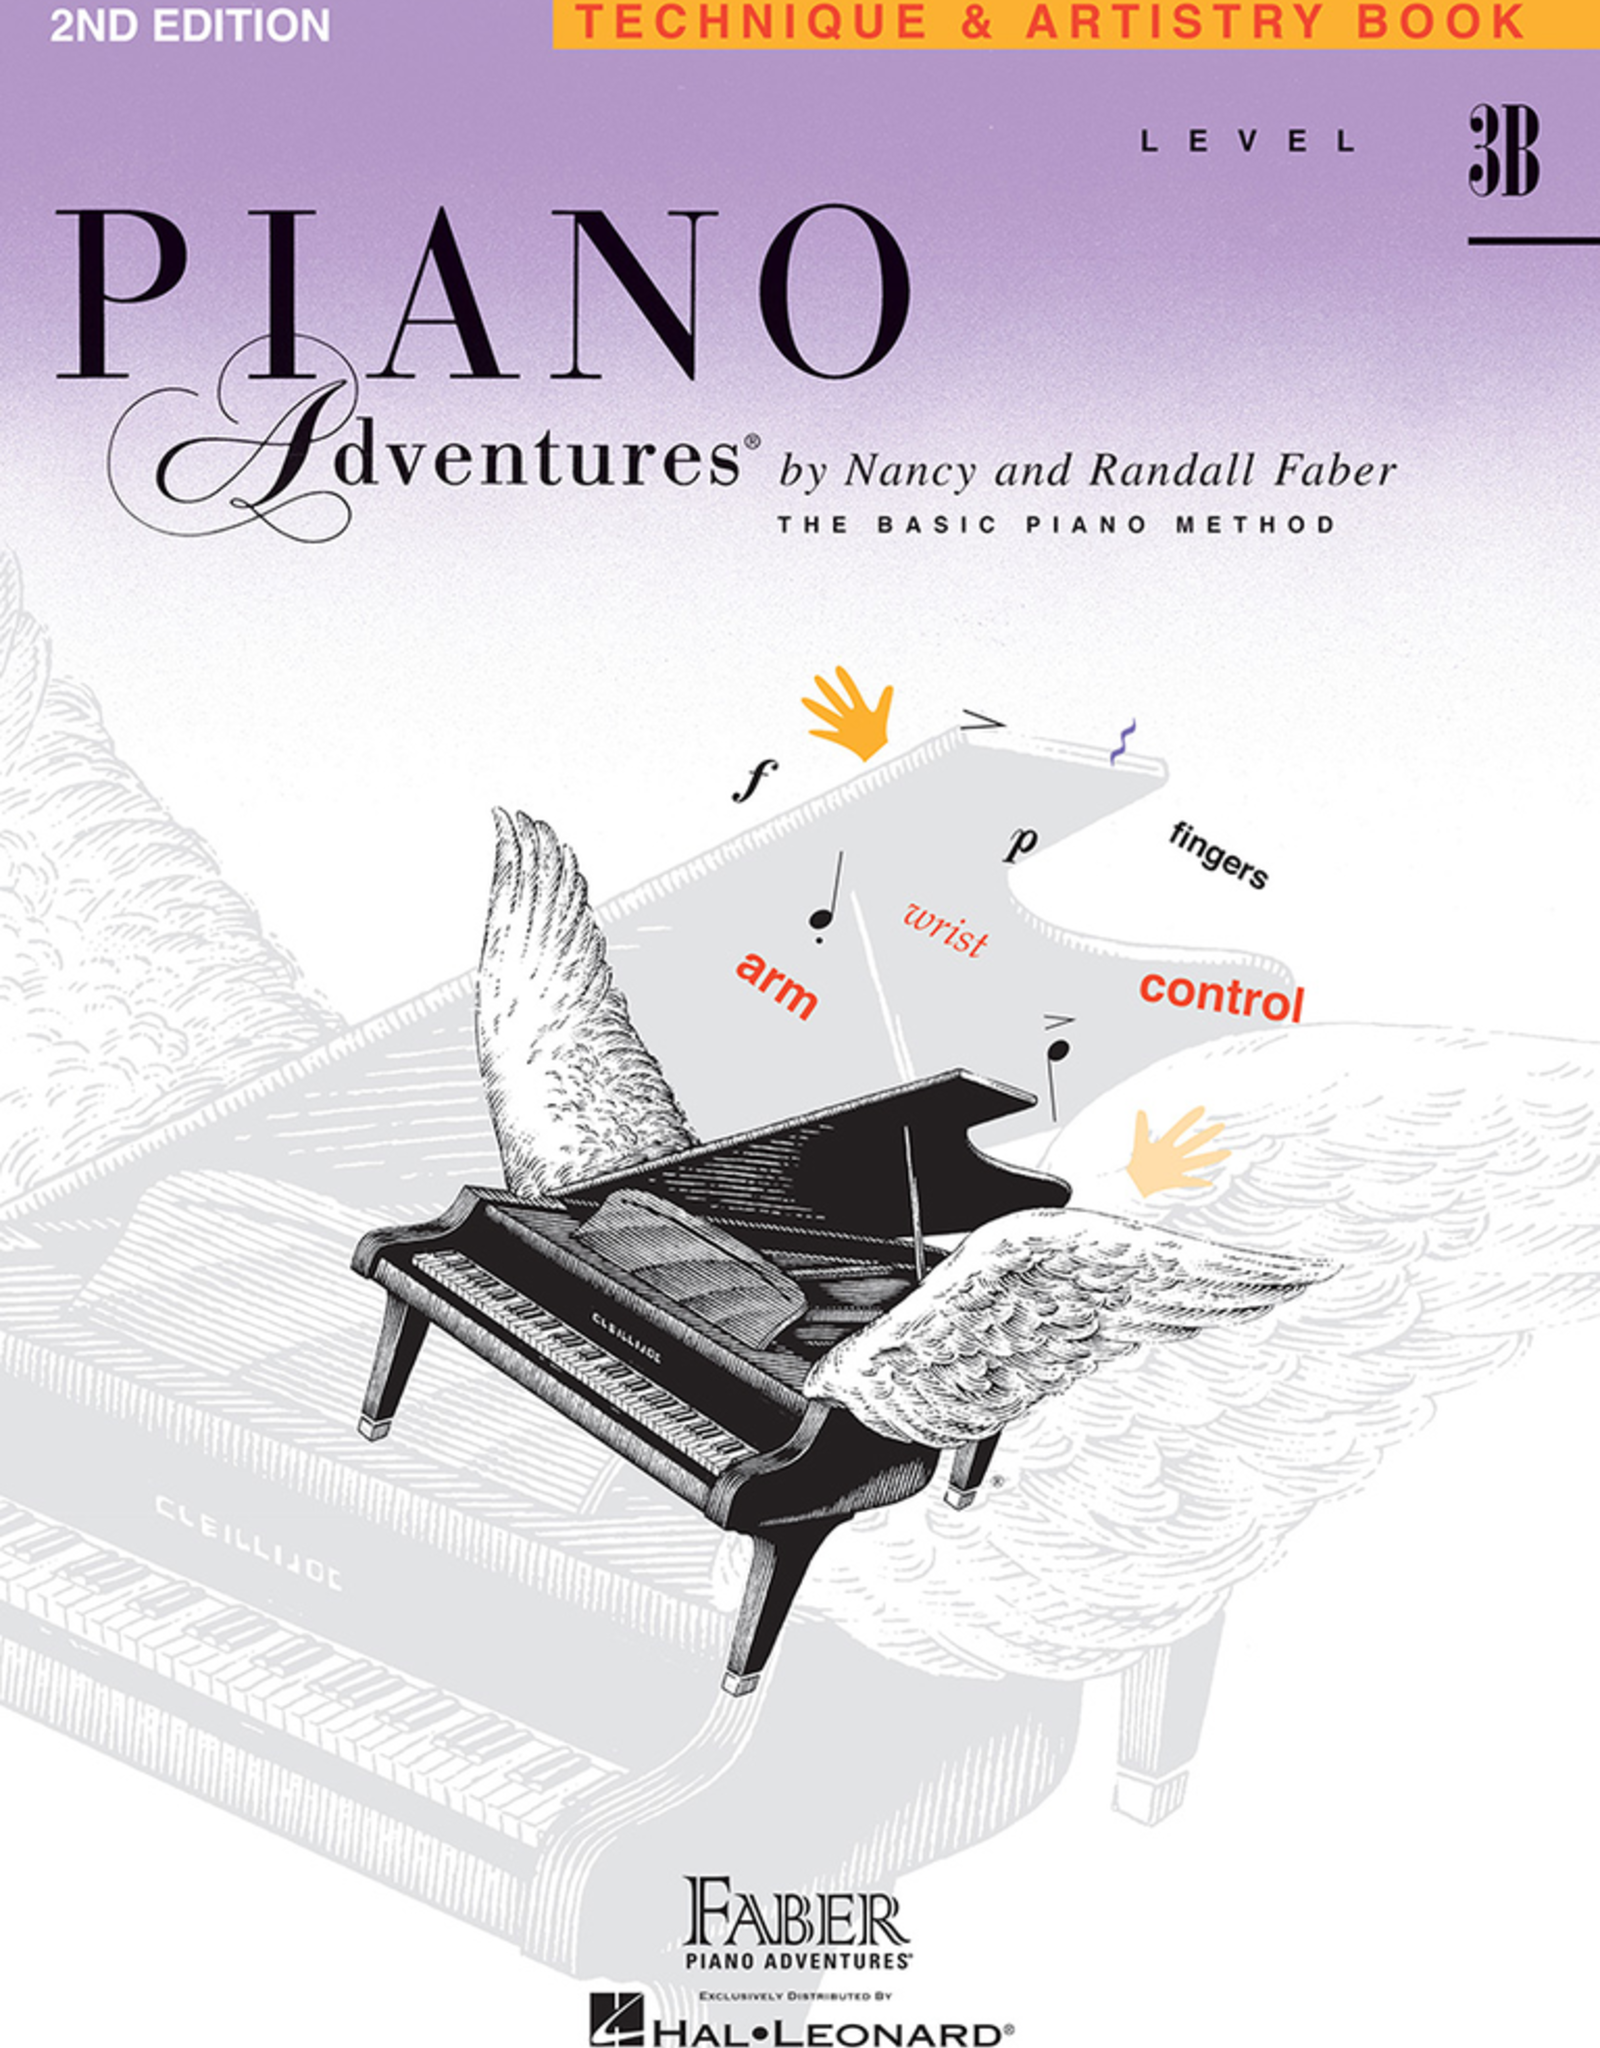 Hal Leonard Piano Adventures Technique & Artistry level 3B *